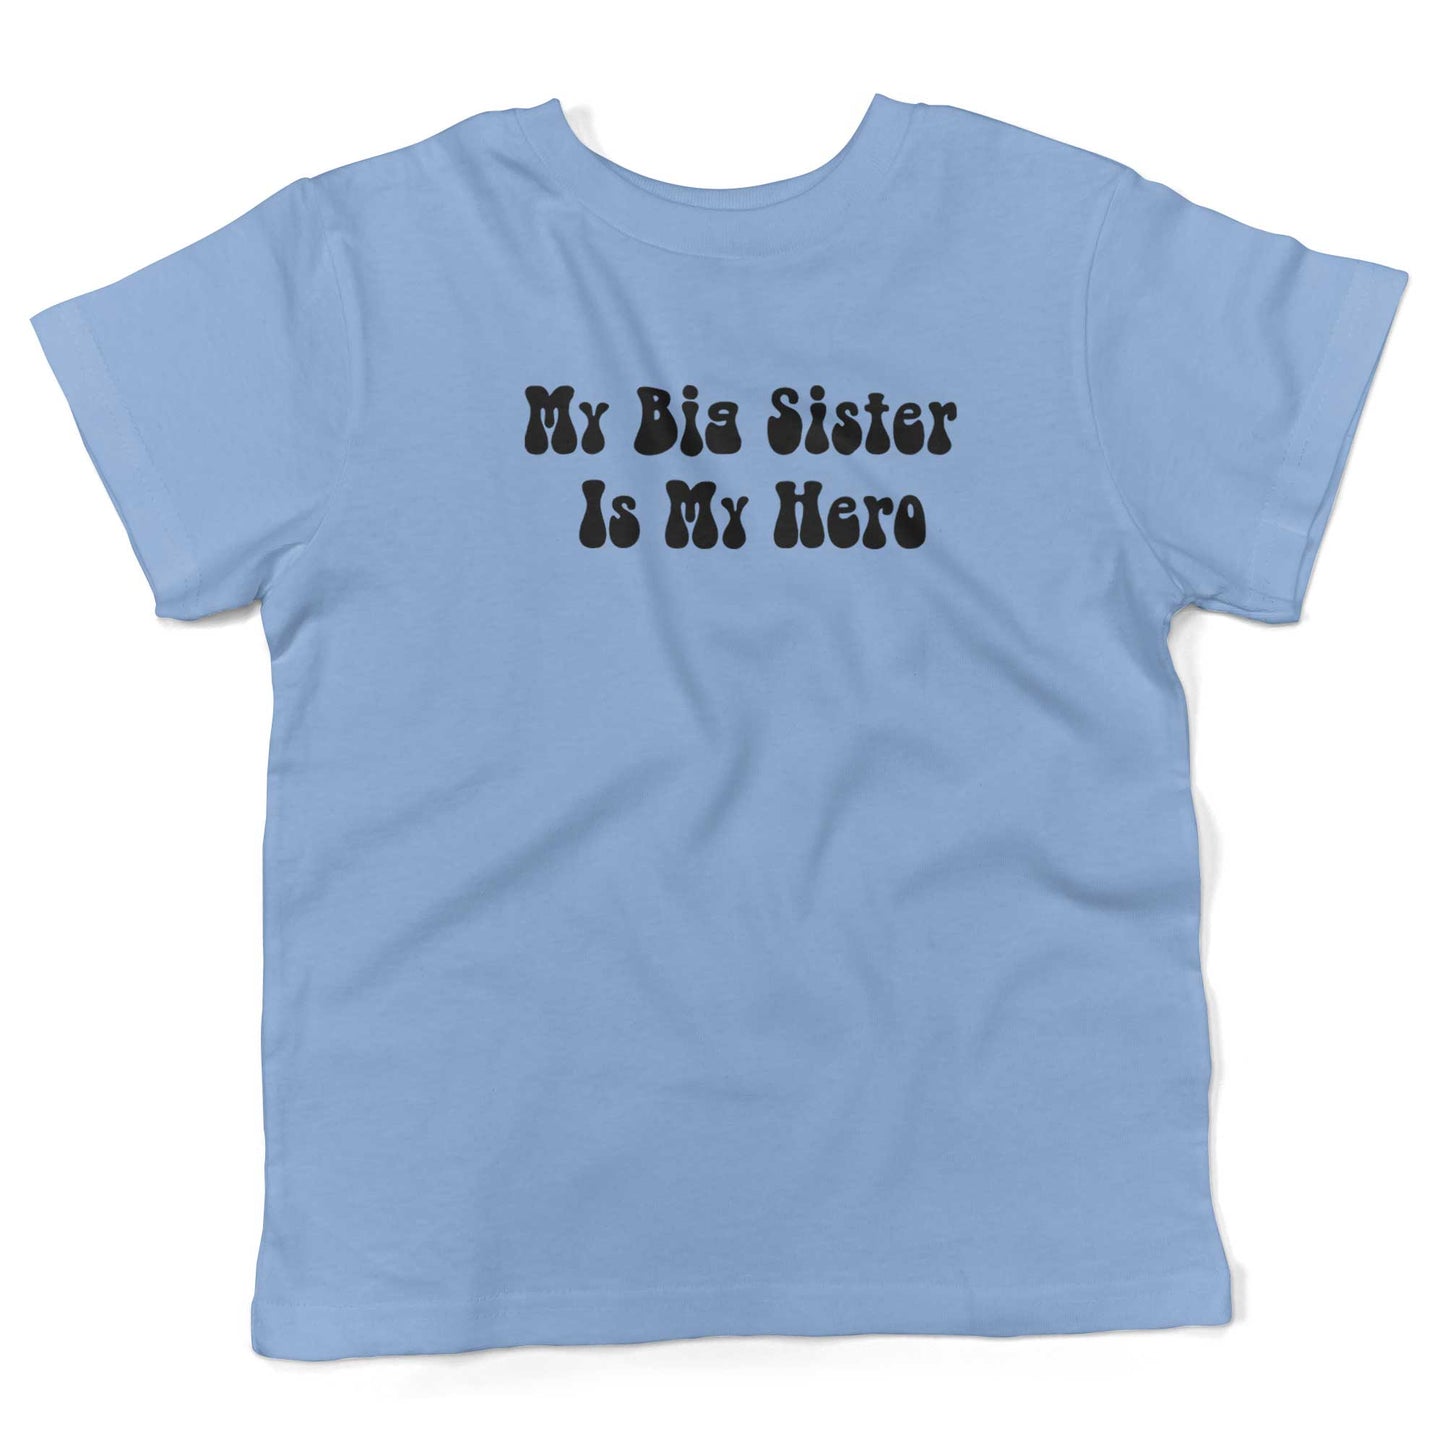 My Big Sister Is My Hero Toddler Shirt-Organic Baby Blue-2T